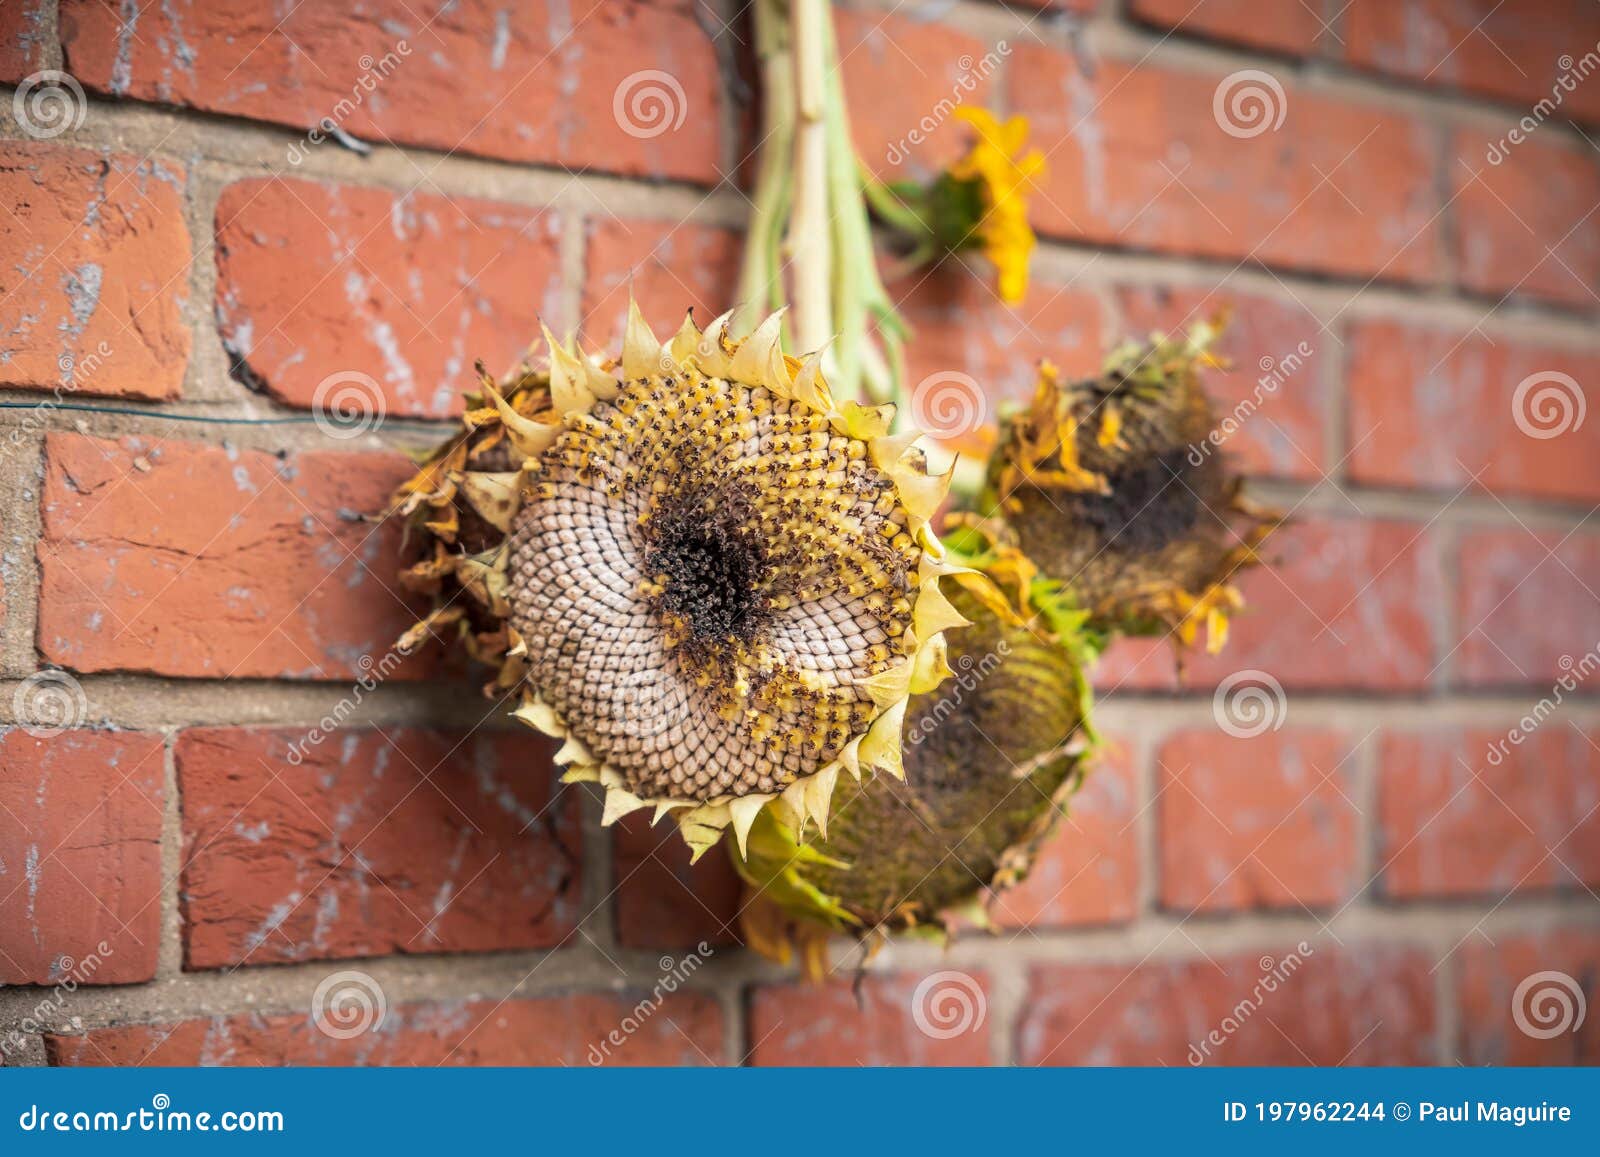 drying sunflower heads birds uk dried sunflowers bird food 197962244